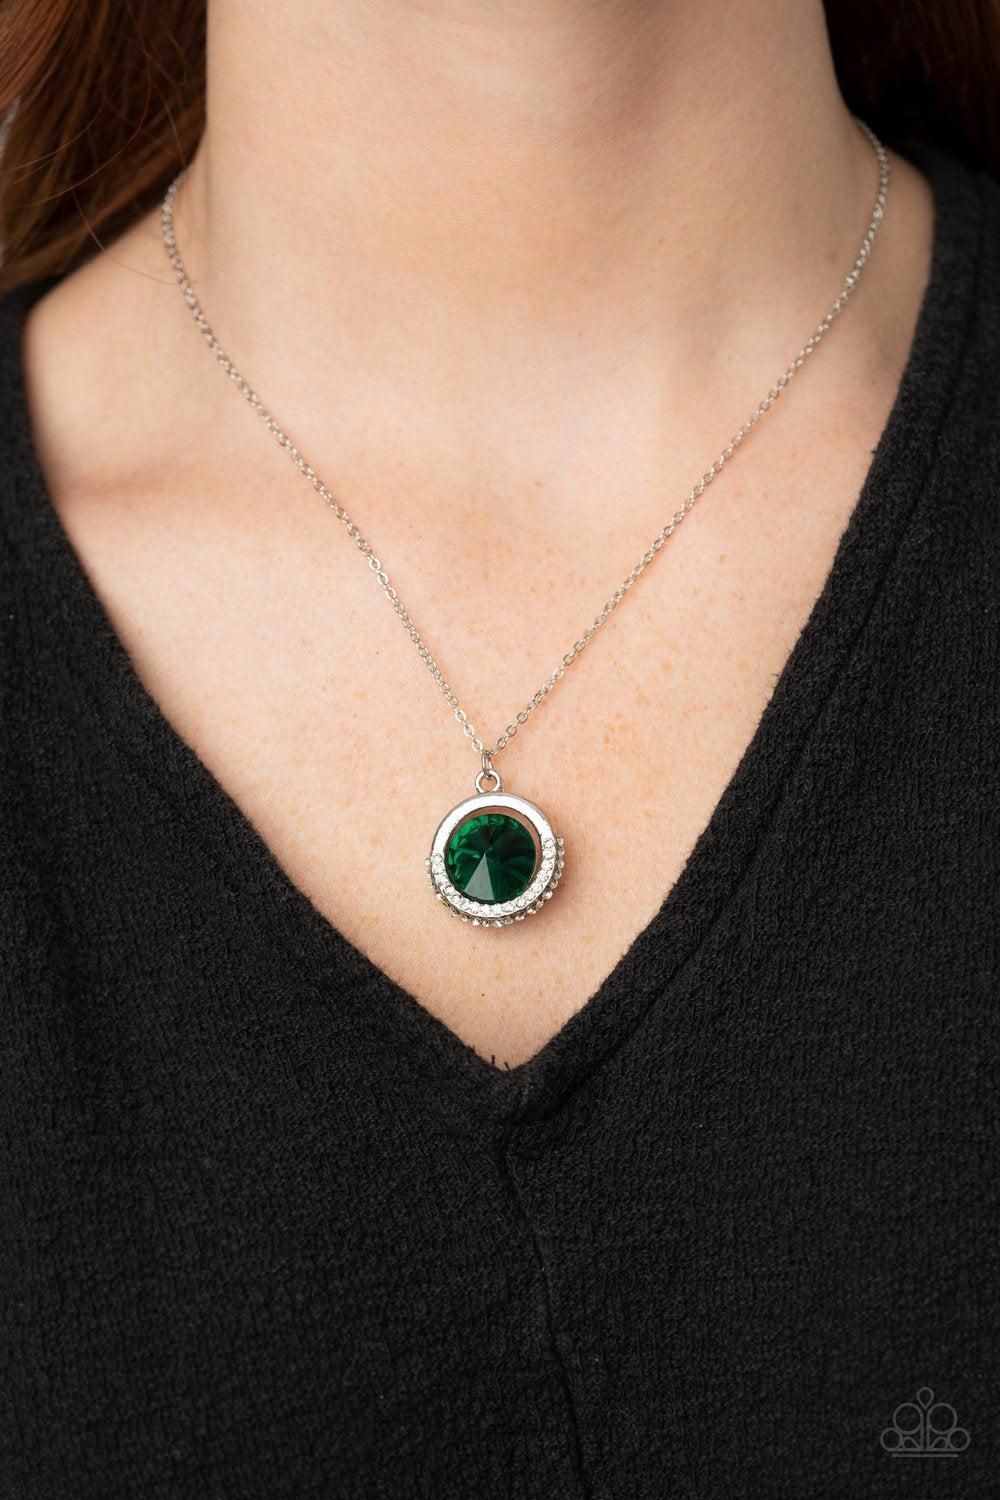 Trademark Twinkle Green Rhinestone Necklace - Paparazzi Accessories - model -CarasShop.com - $5 Jewelry by Cara Jewels